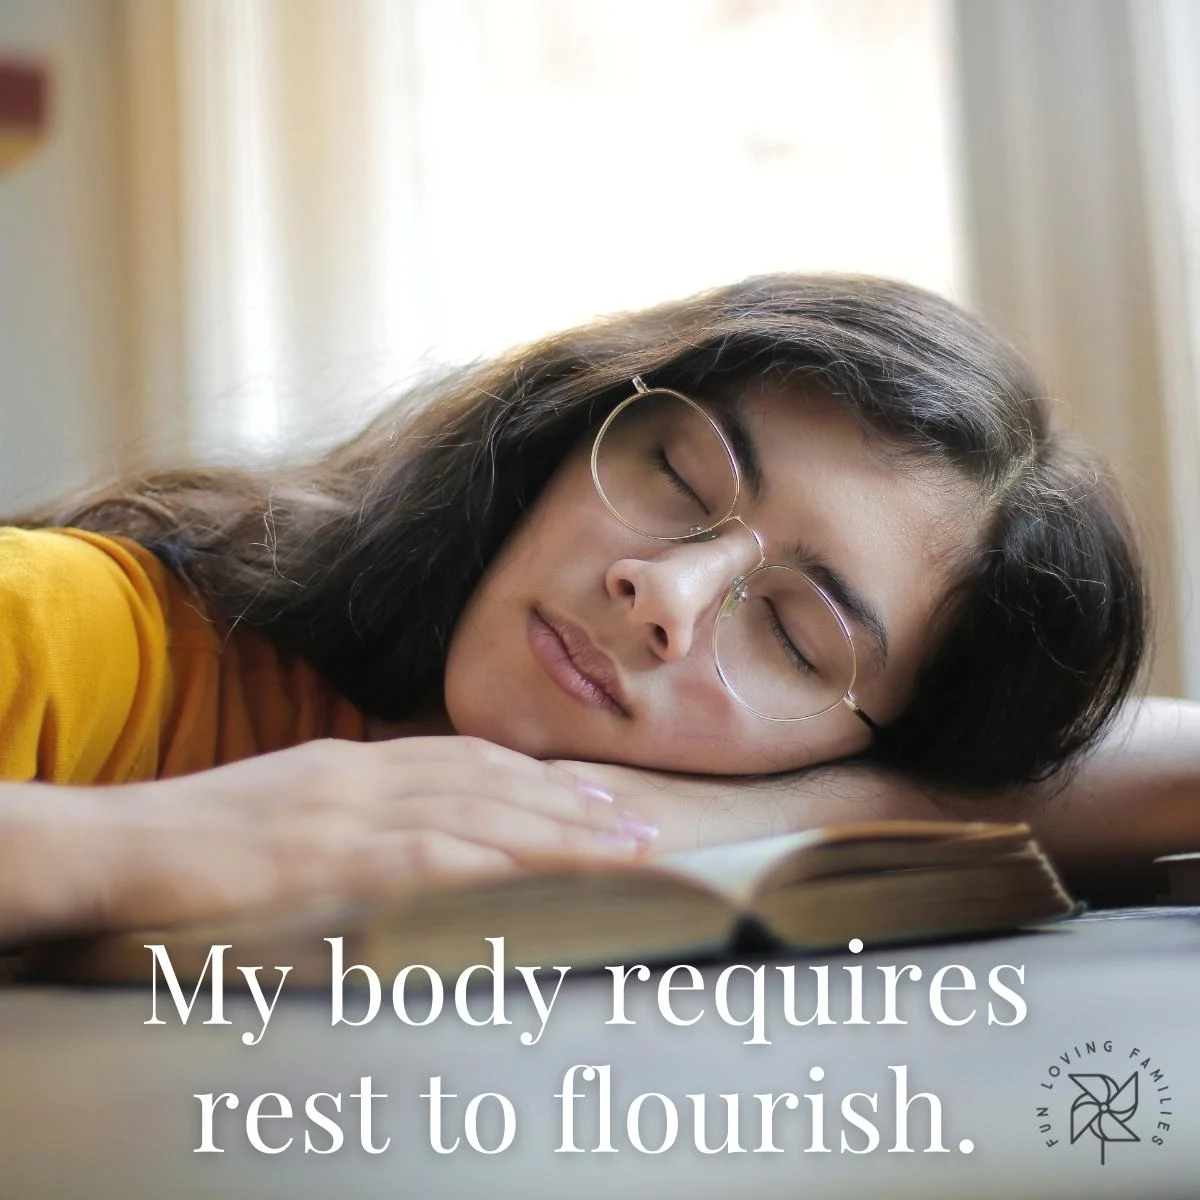 My body requires rest to flourish affirmation